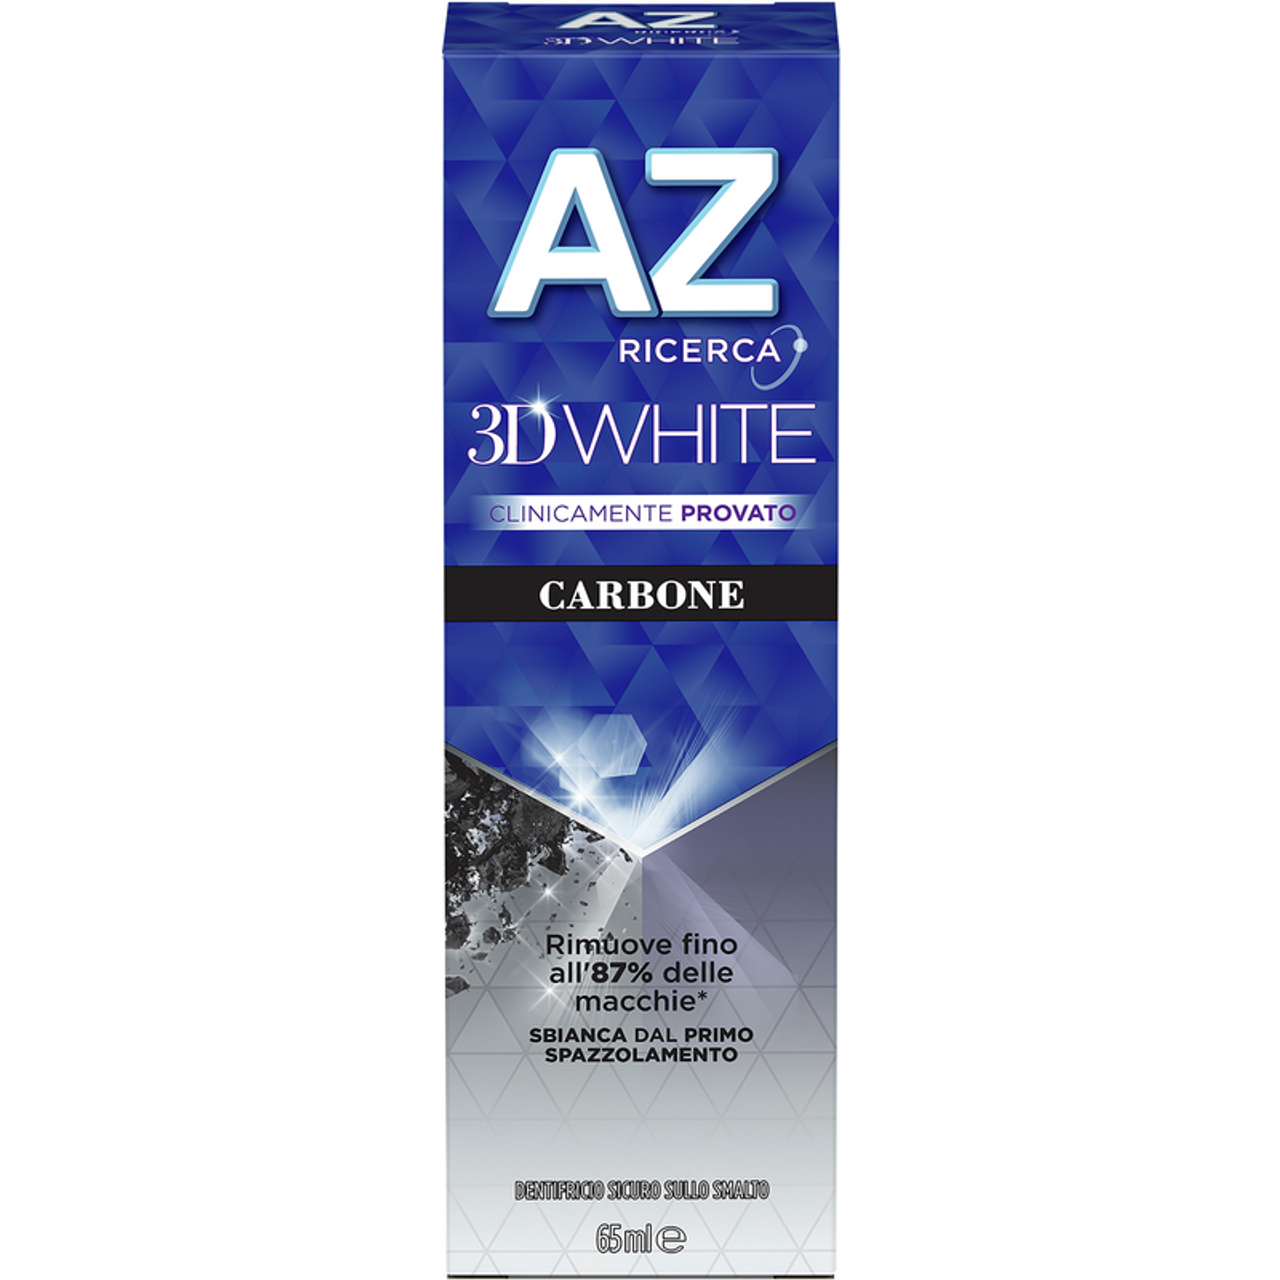 AZ 3D WHITE CARBONE 65ML